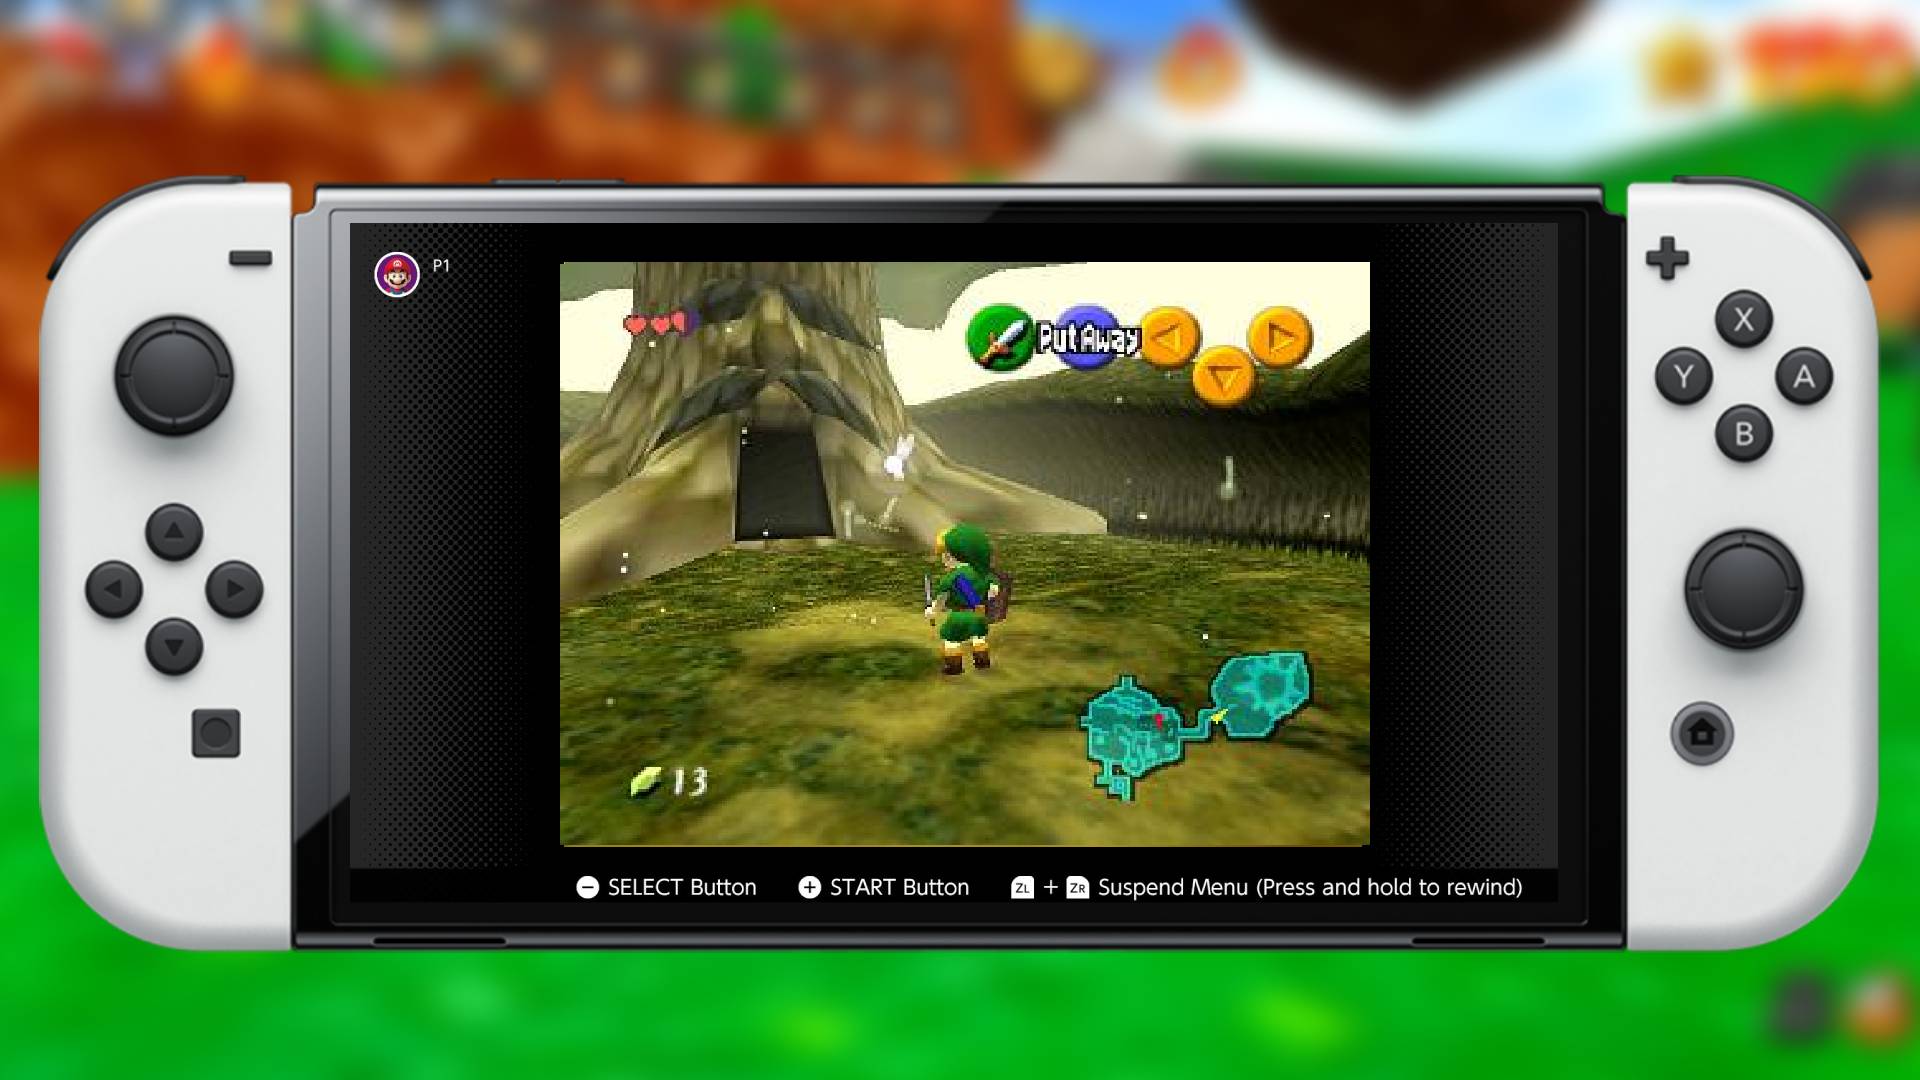 Play The Legend of Zelda: Ocarina of Time Online – Nintendo 64(N64